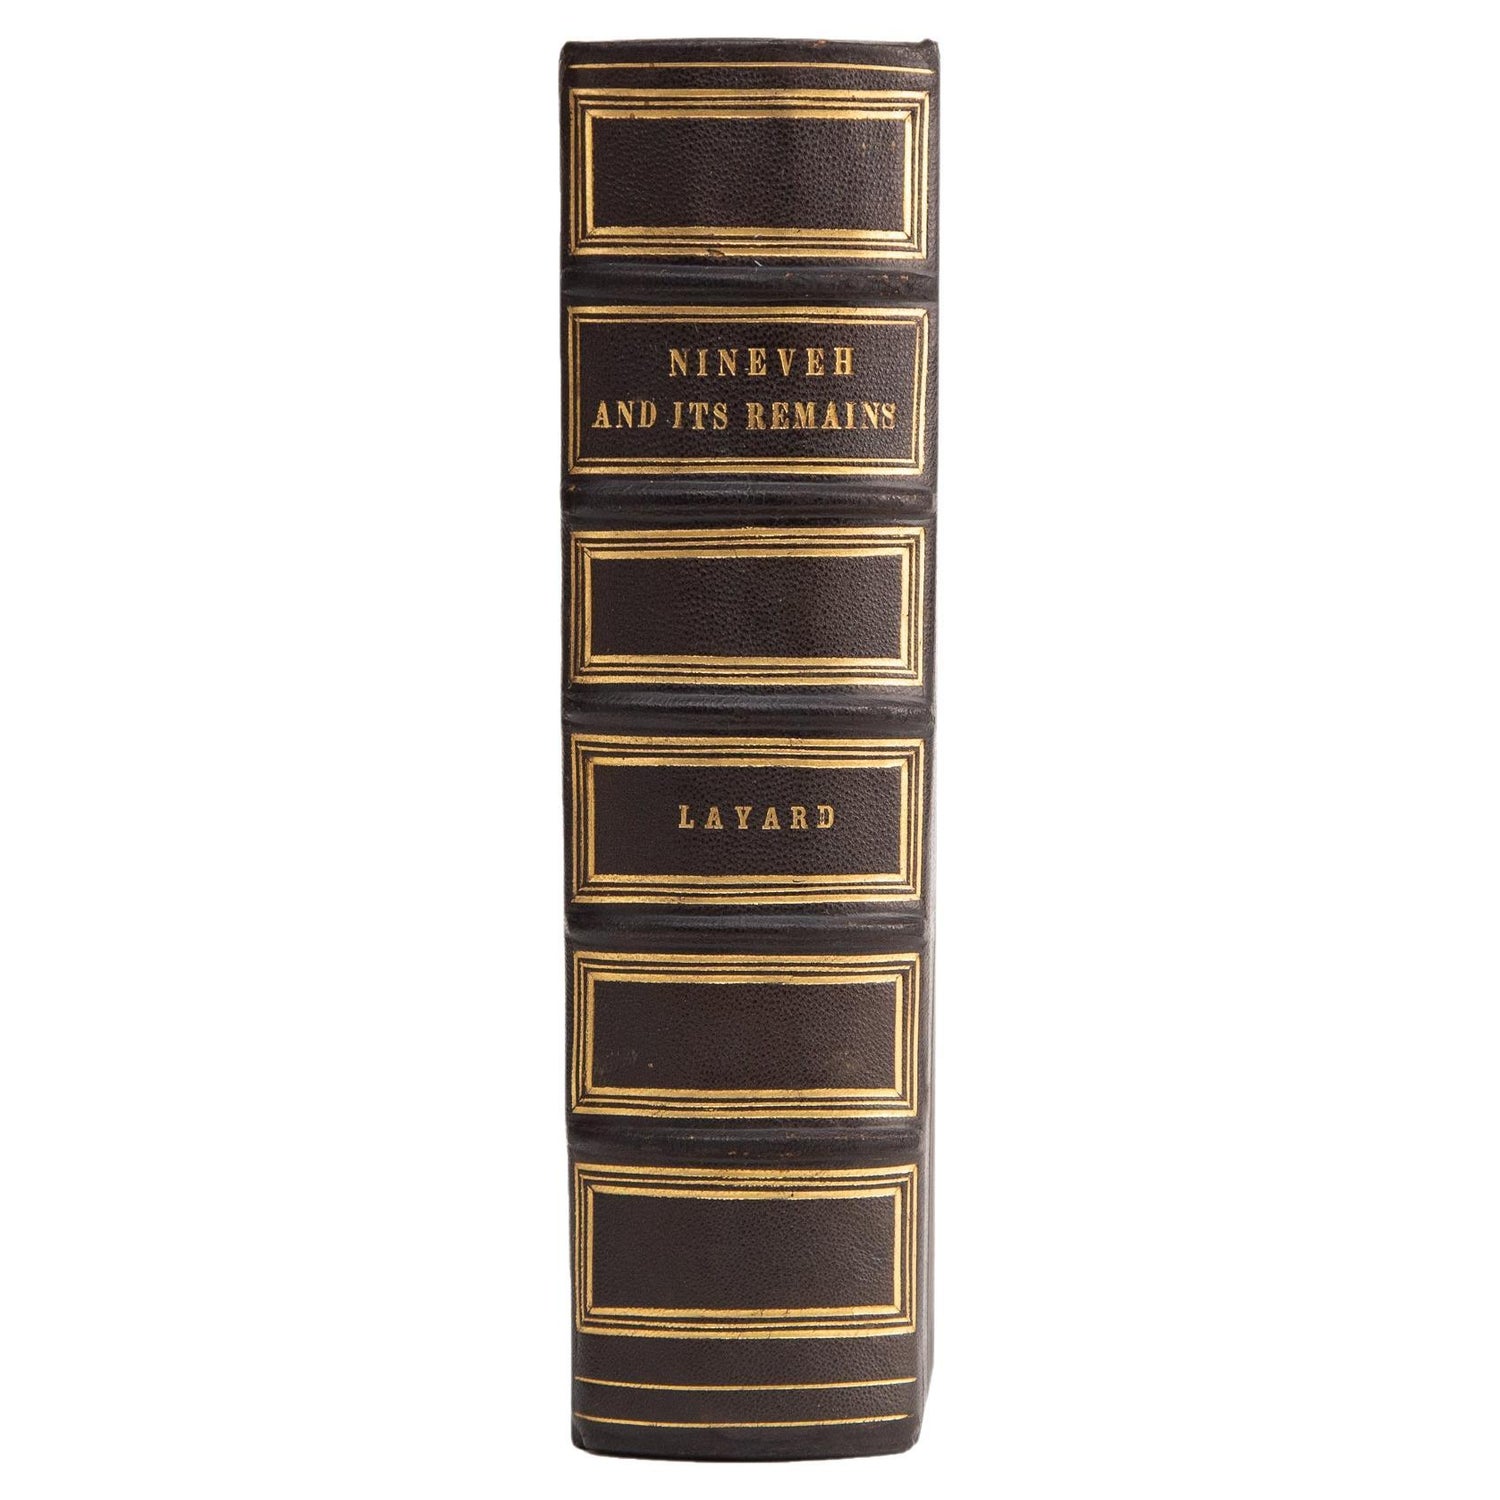 2 Volumes, Henry David Thoreau, Walden at 1stDibs